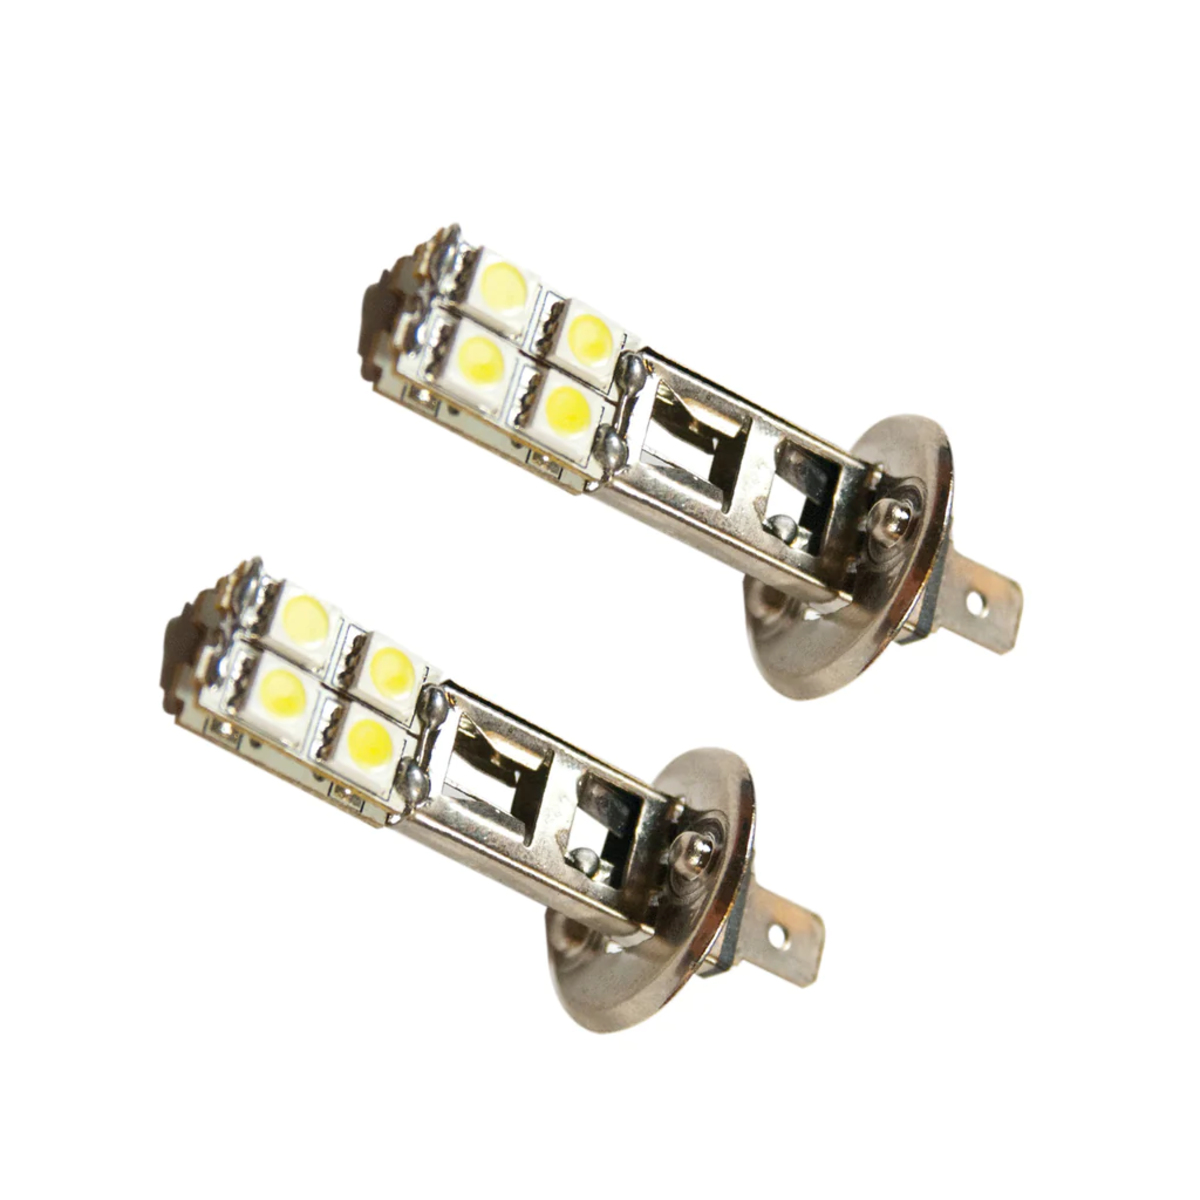 SUPAREE Upgraded H1 LED Headlight Bulbs Plug and Play